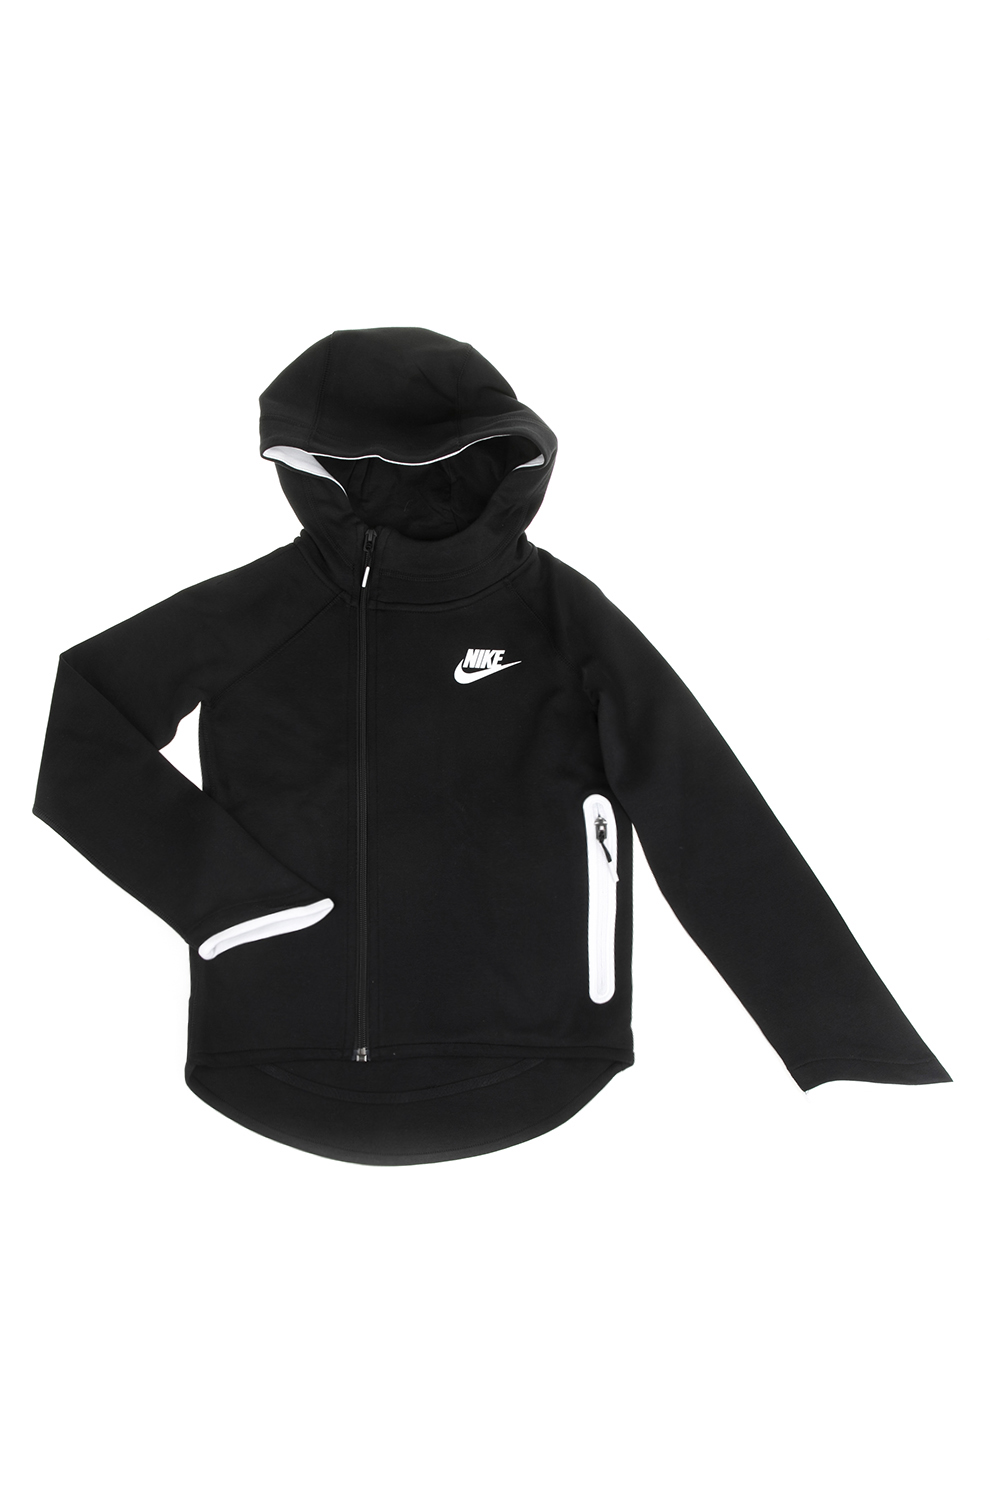 NIKE - Κοριτσίστικη ζακέτα με κουκούλα Nike Sportswear μαύρη Παιδικά/Girls/Ρούχα/Αθλητικά